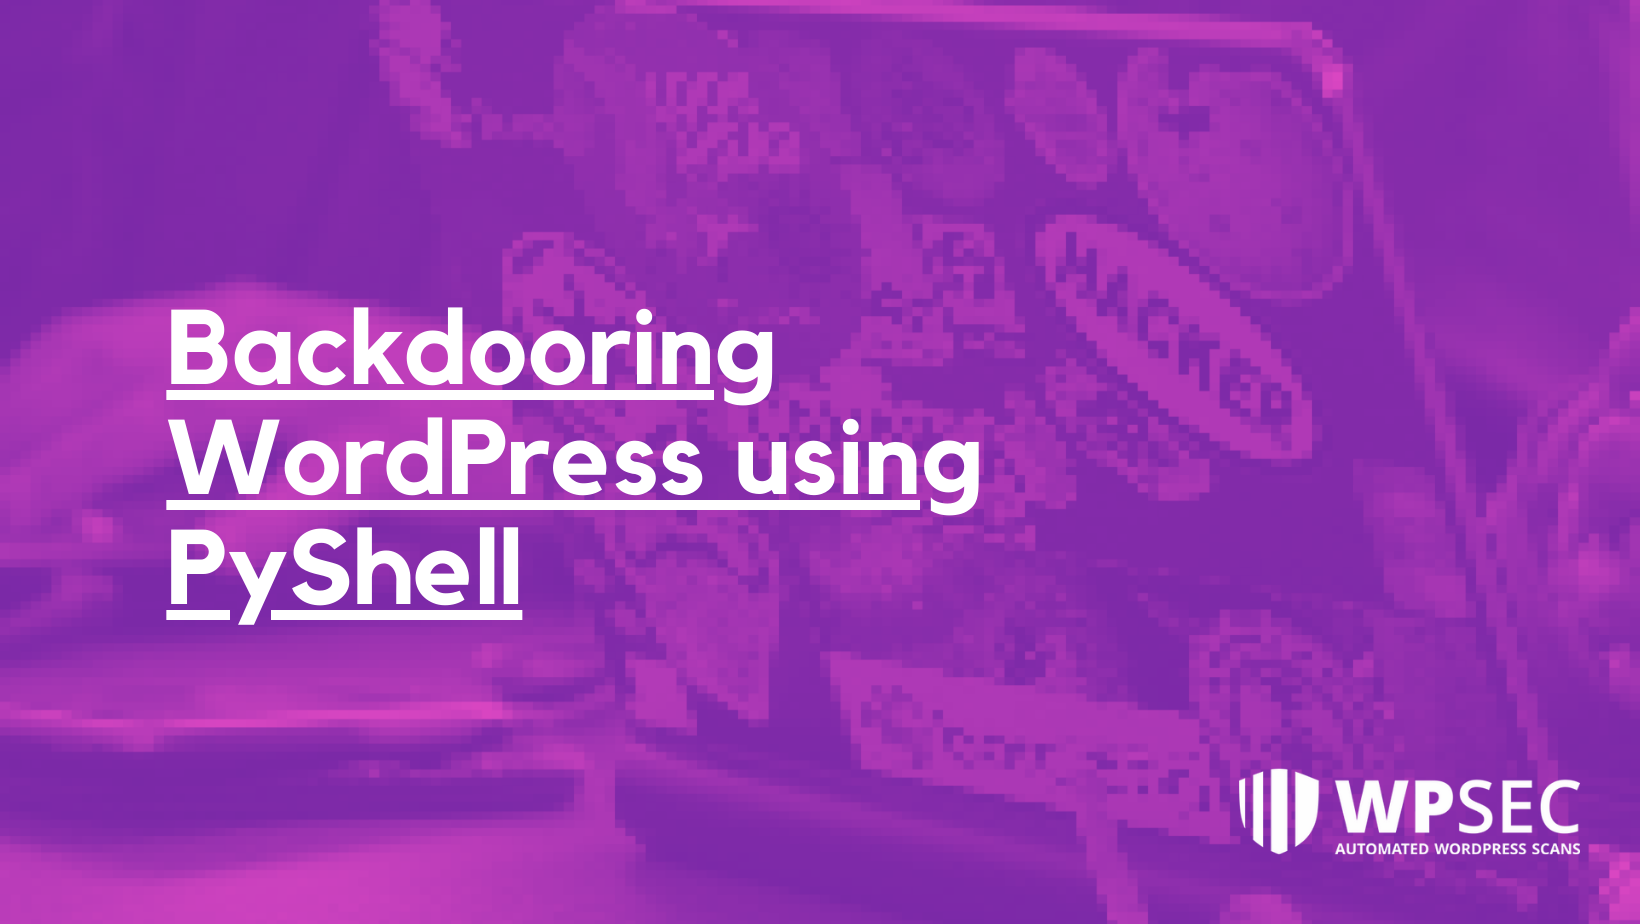 Backdooring WordPress using PyShell